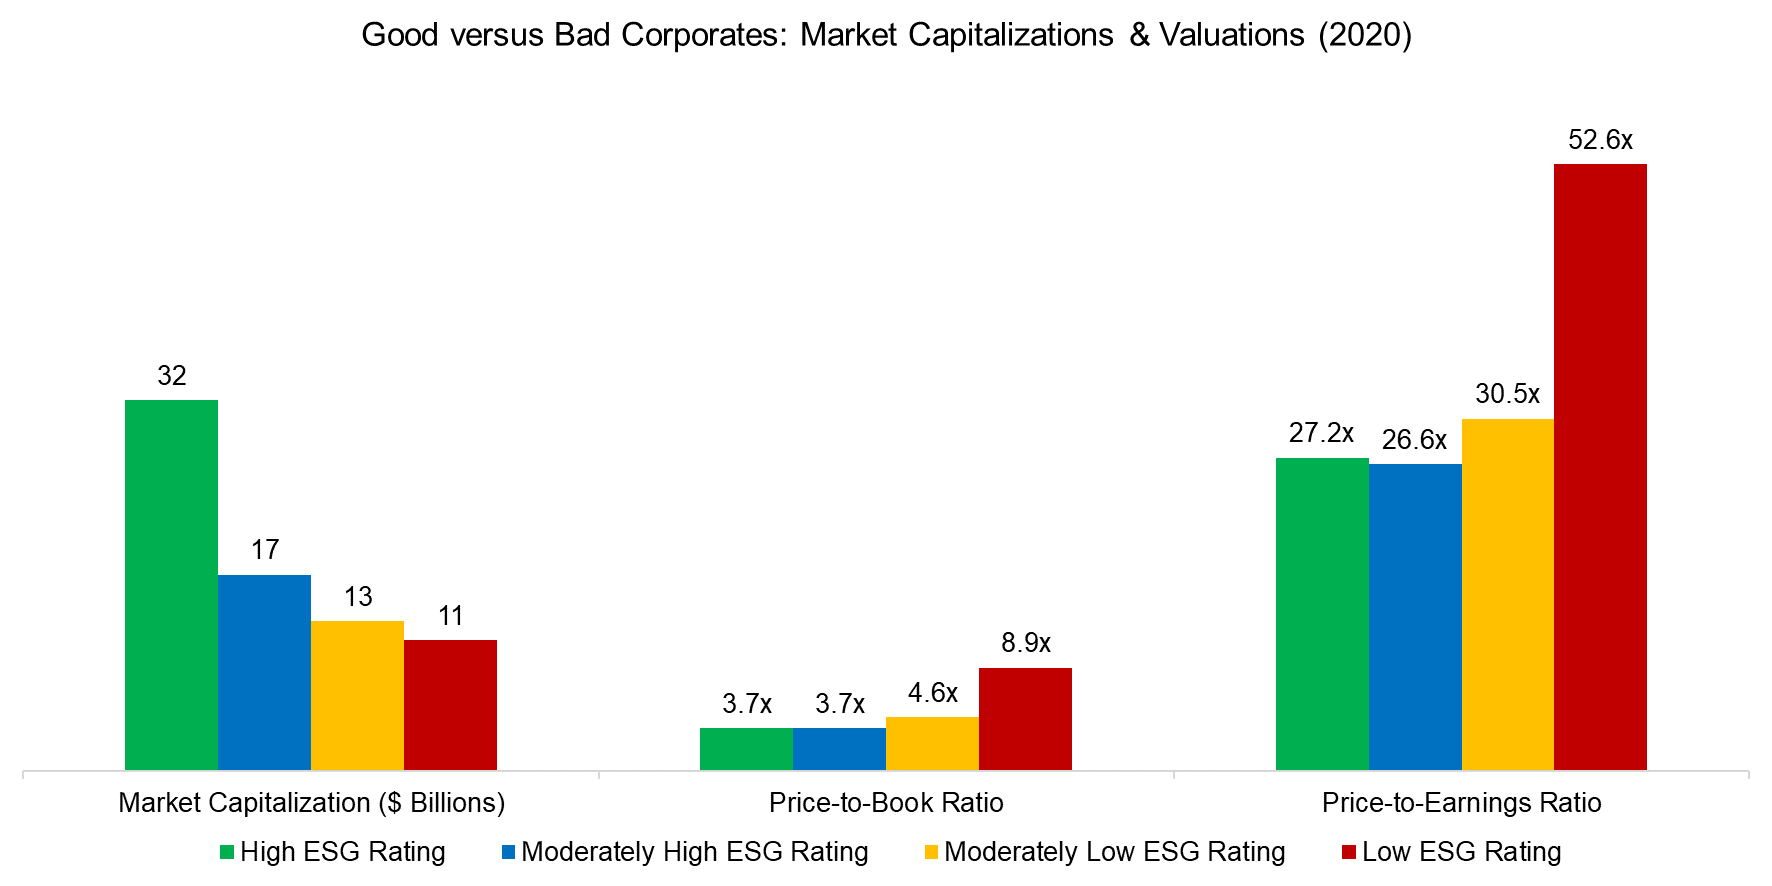 Good versus Bad Corporates Market Capitalizations & Valuations (2020)